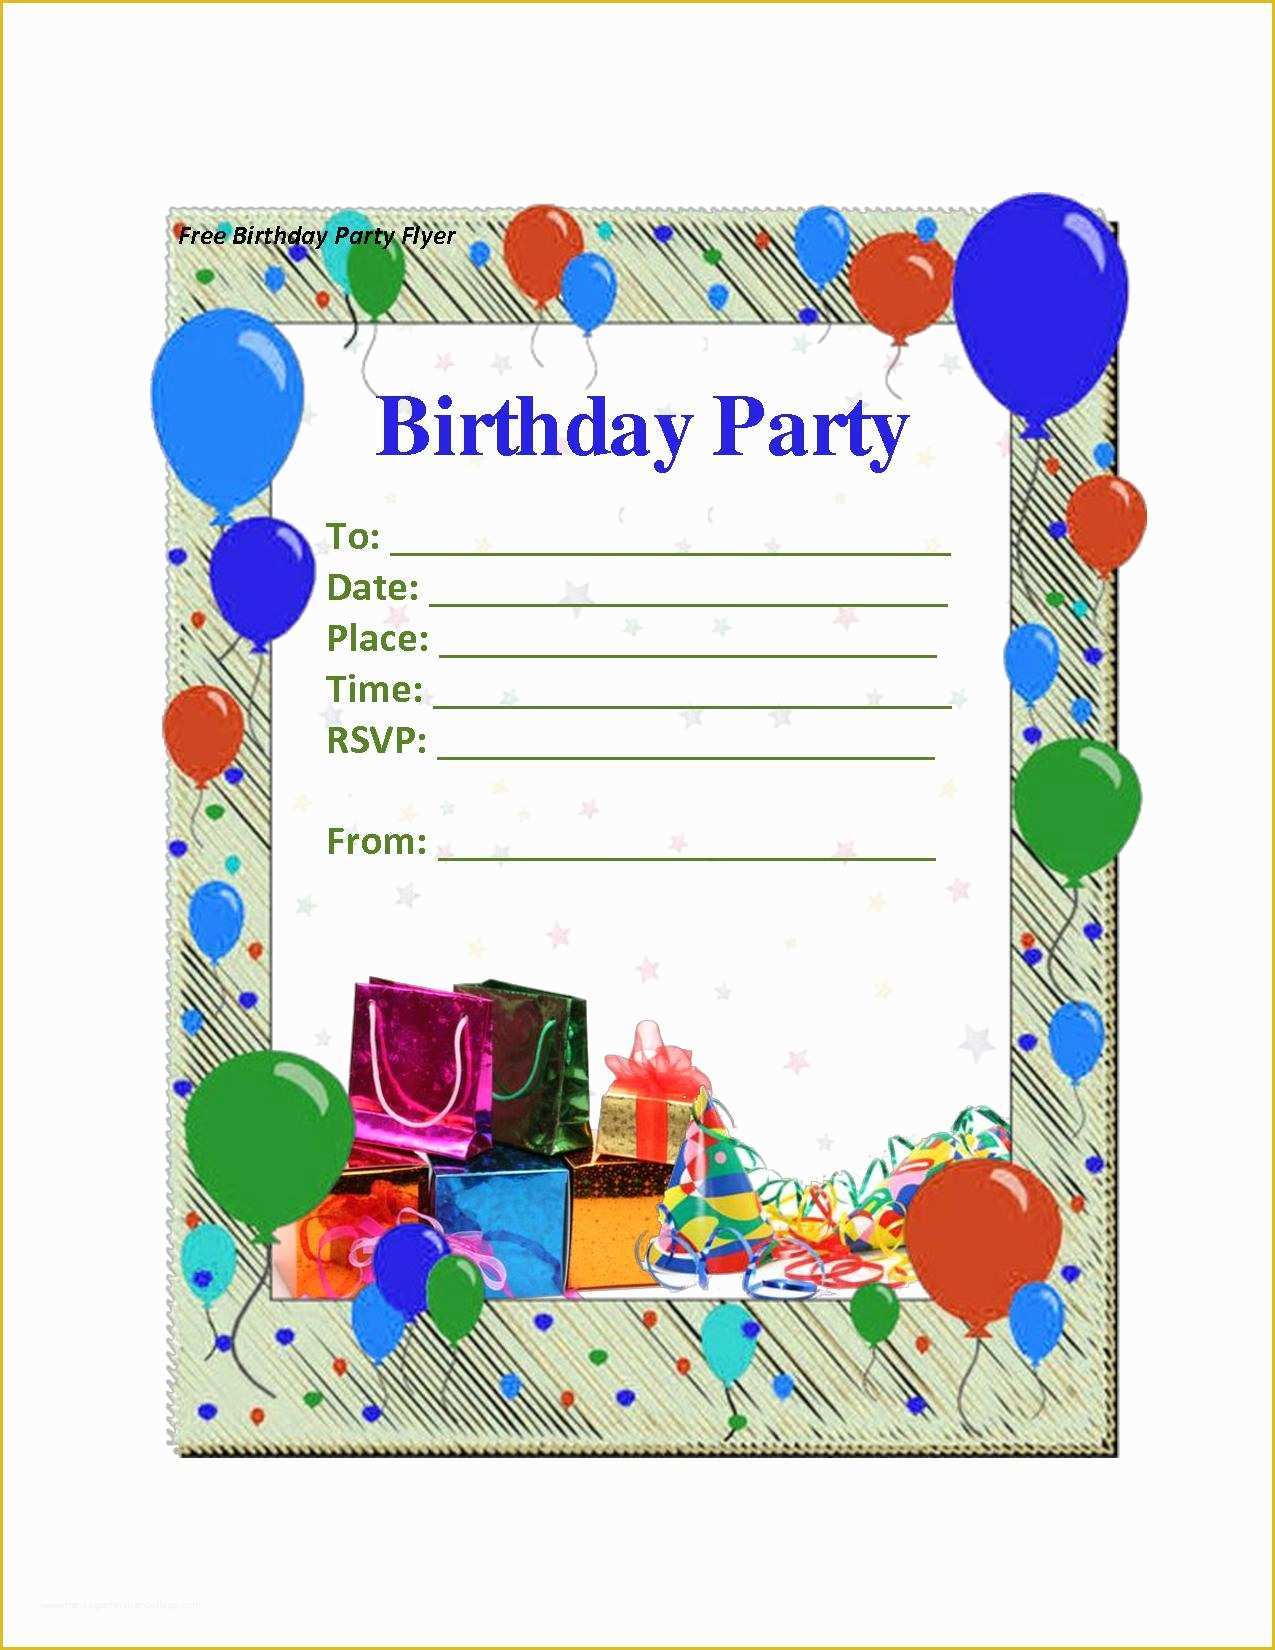 Free Birthday Party Invitation Templates Of Free Birthday Party Invitation Templates